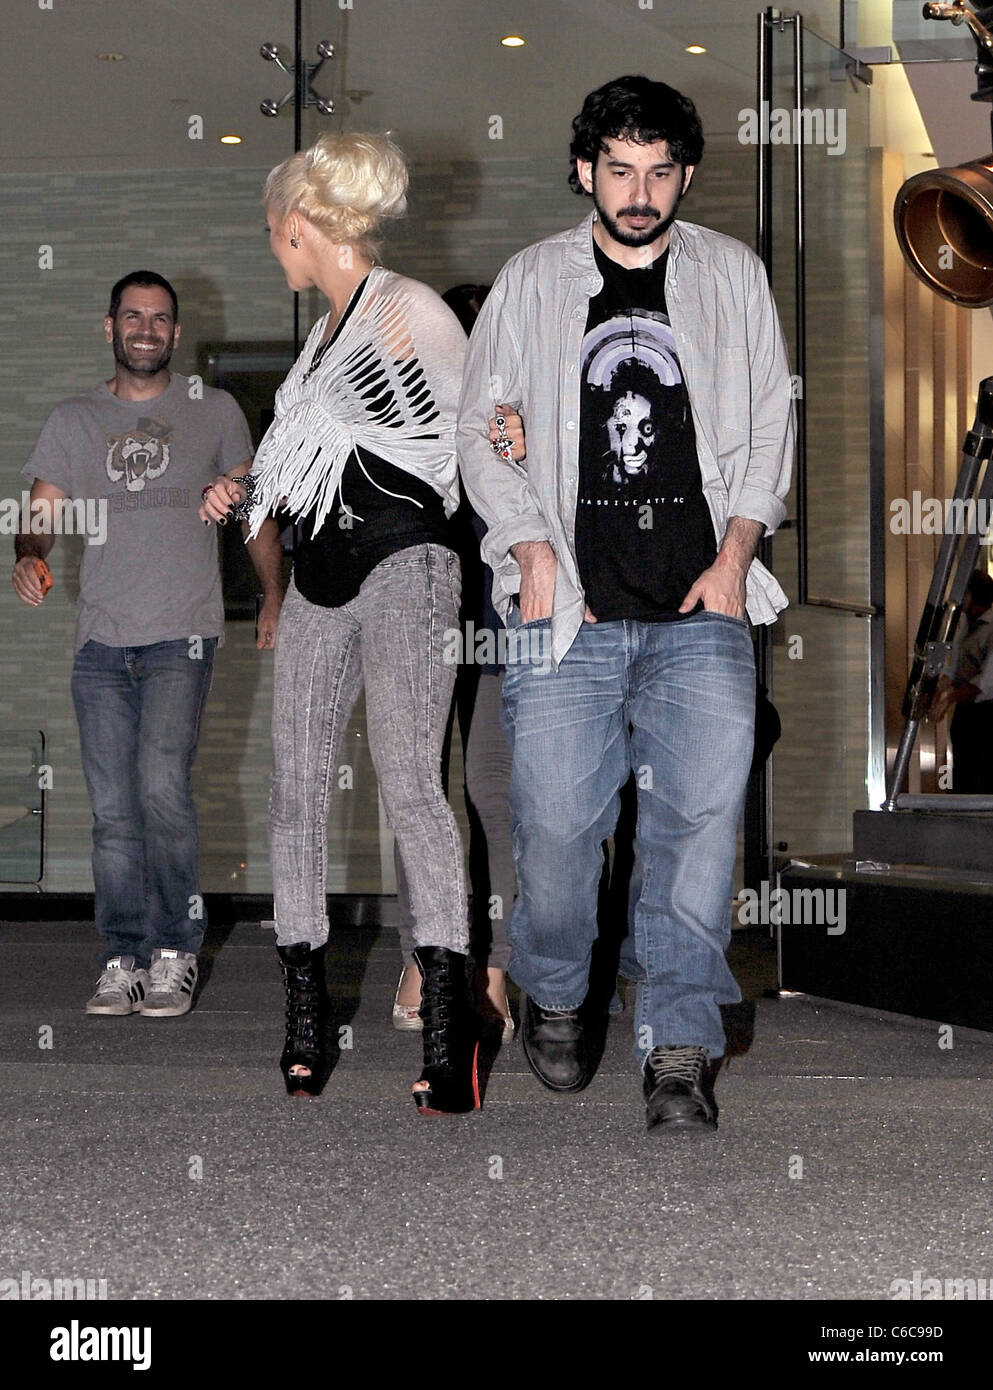 Christina Aguilera and her husband Jordan Bratman depart SoHo restaurant  Los Angeles, California - 17.06.10 Stock Photo - Alamy